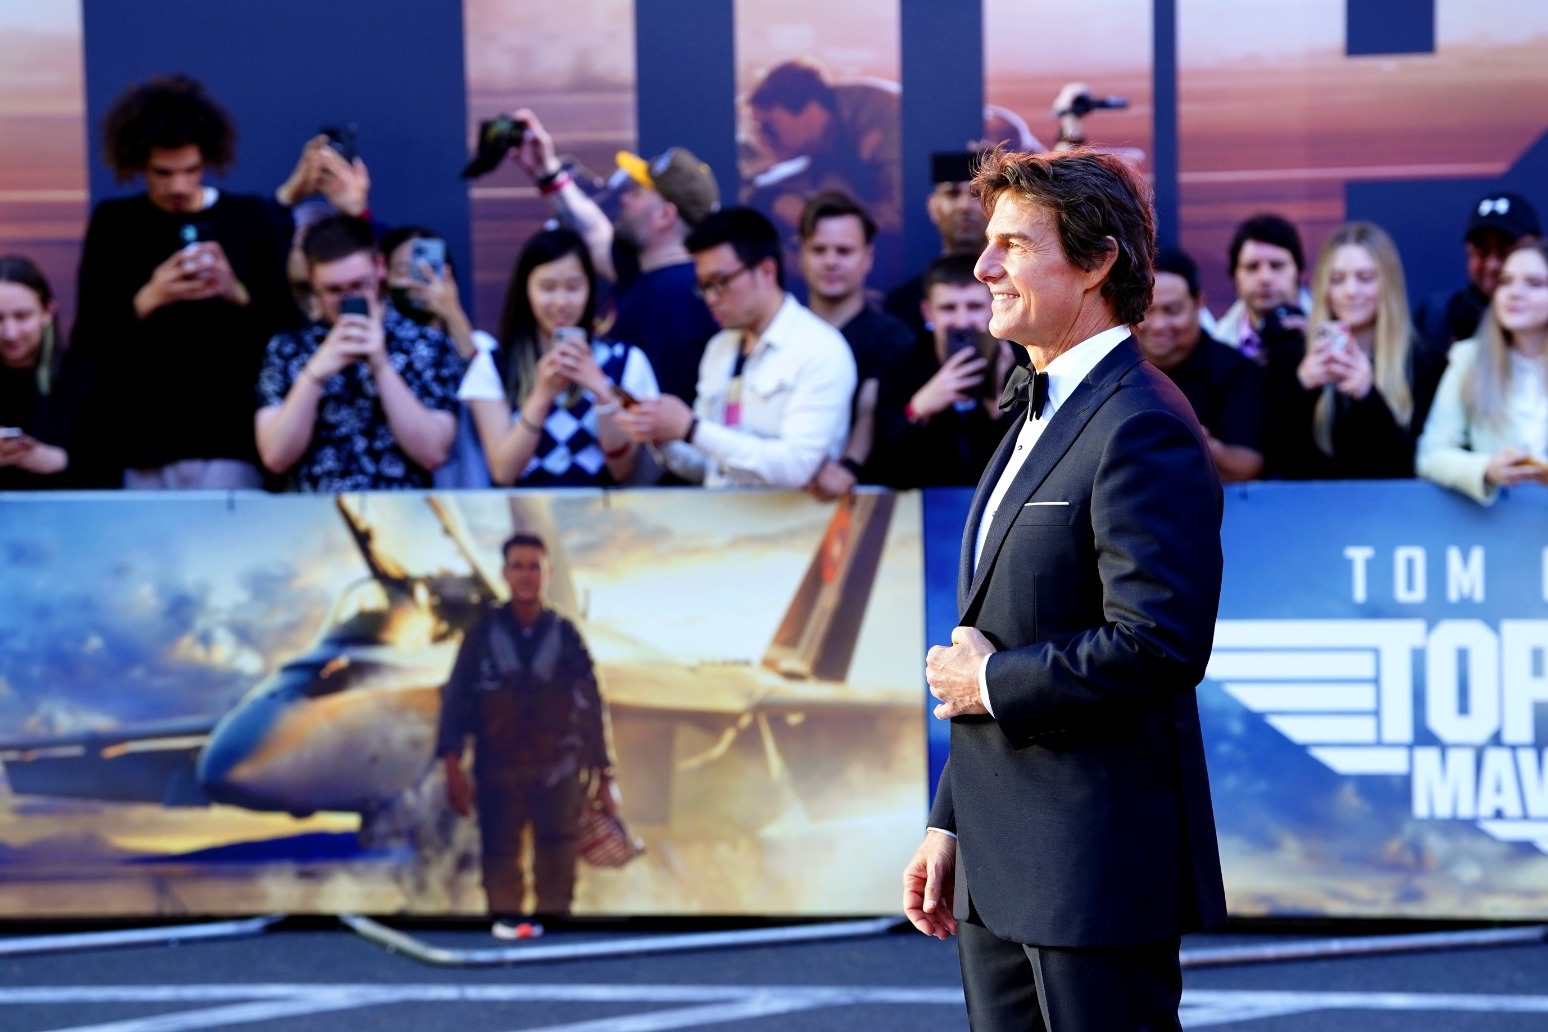 Tom Cruise expresses admiration for William at Top Gun: Maverick premiere 